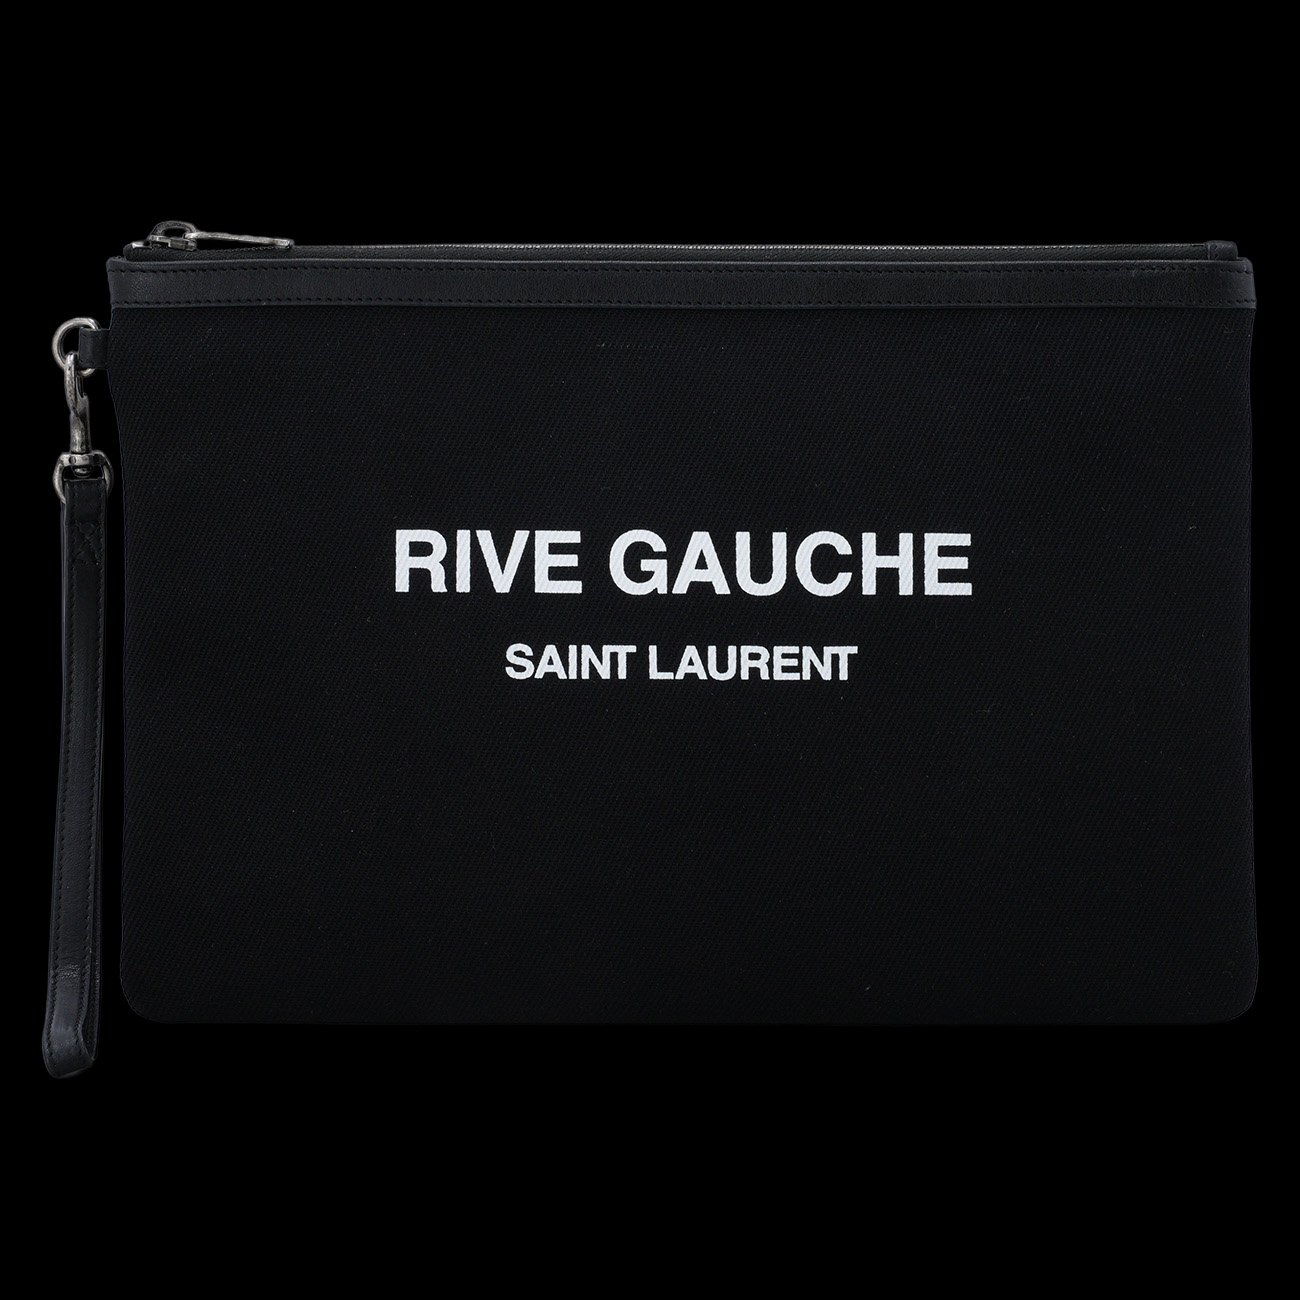 Yves Saint Laurent(USED)생로랑 581369 패브릭 리브고쉬 클러치